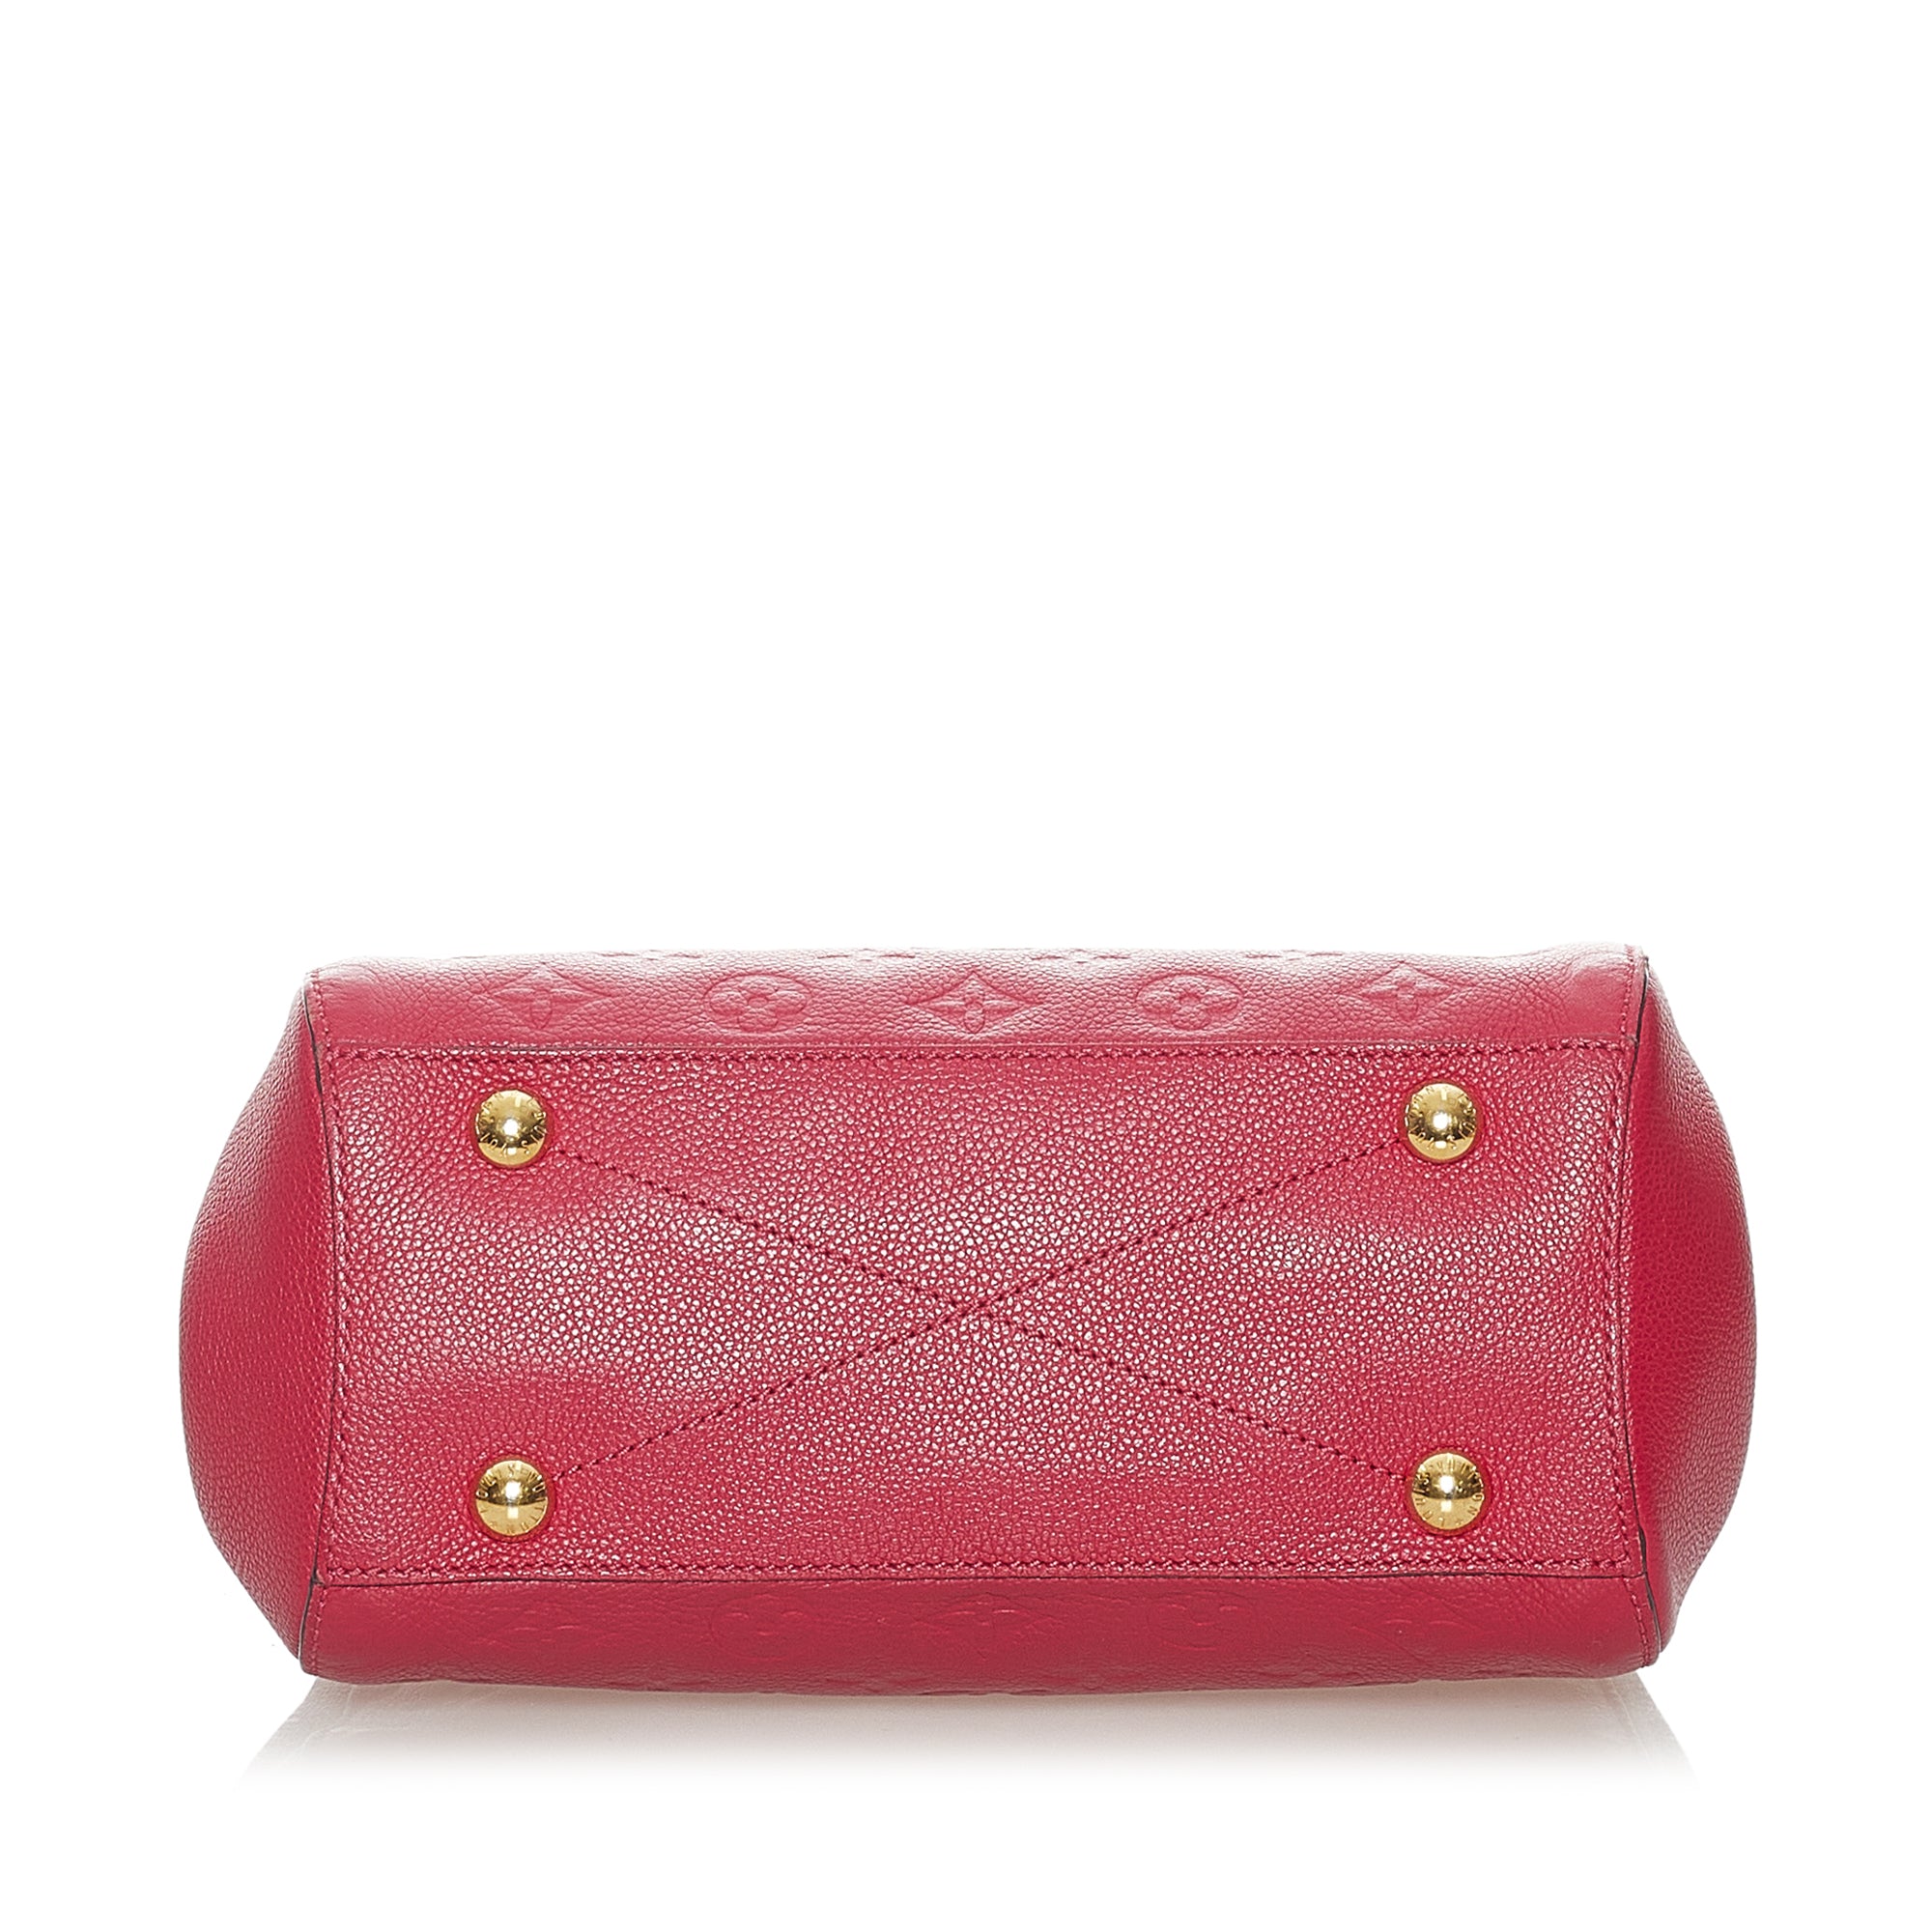 Louis Vuitton Montebello Mm Cerise - Vernis Red Epi Leather Tote